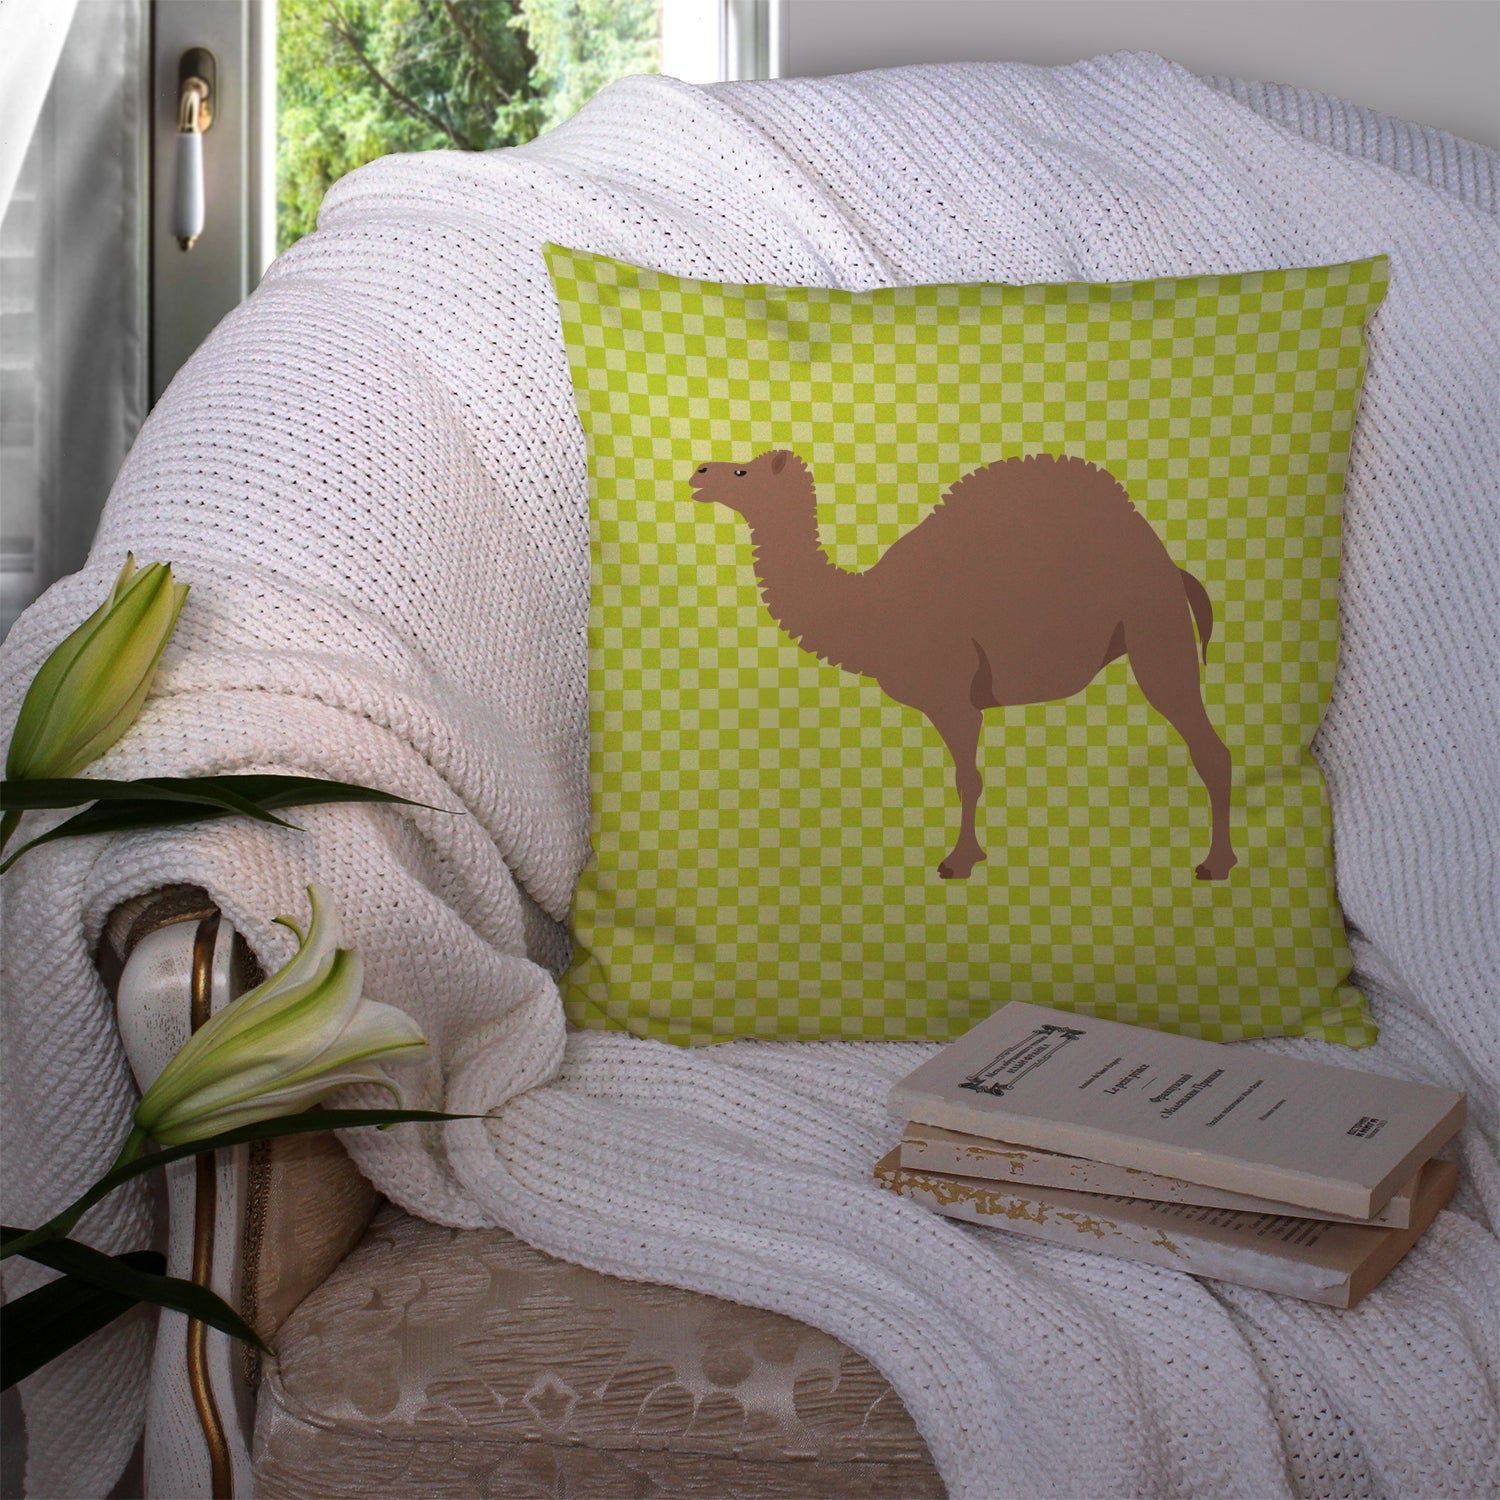 F1 Hybrid Camel Green Fabric Decorative Pillow BB7645PW1414 - the-store.com